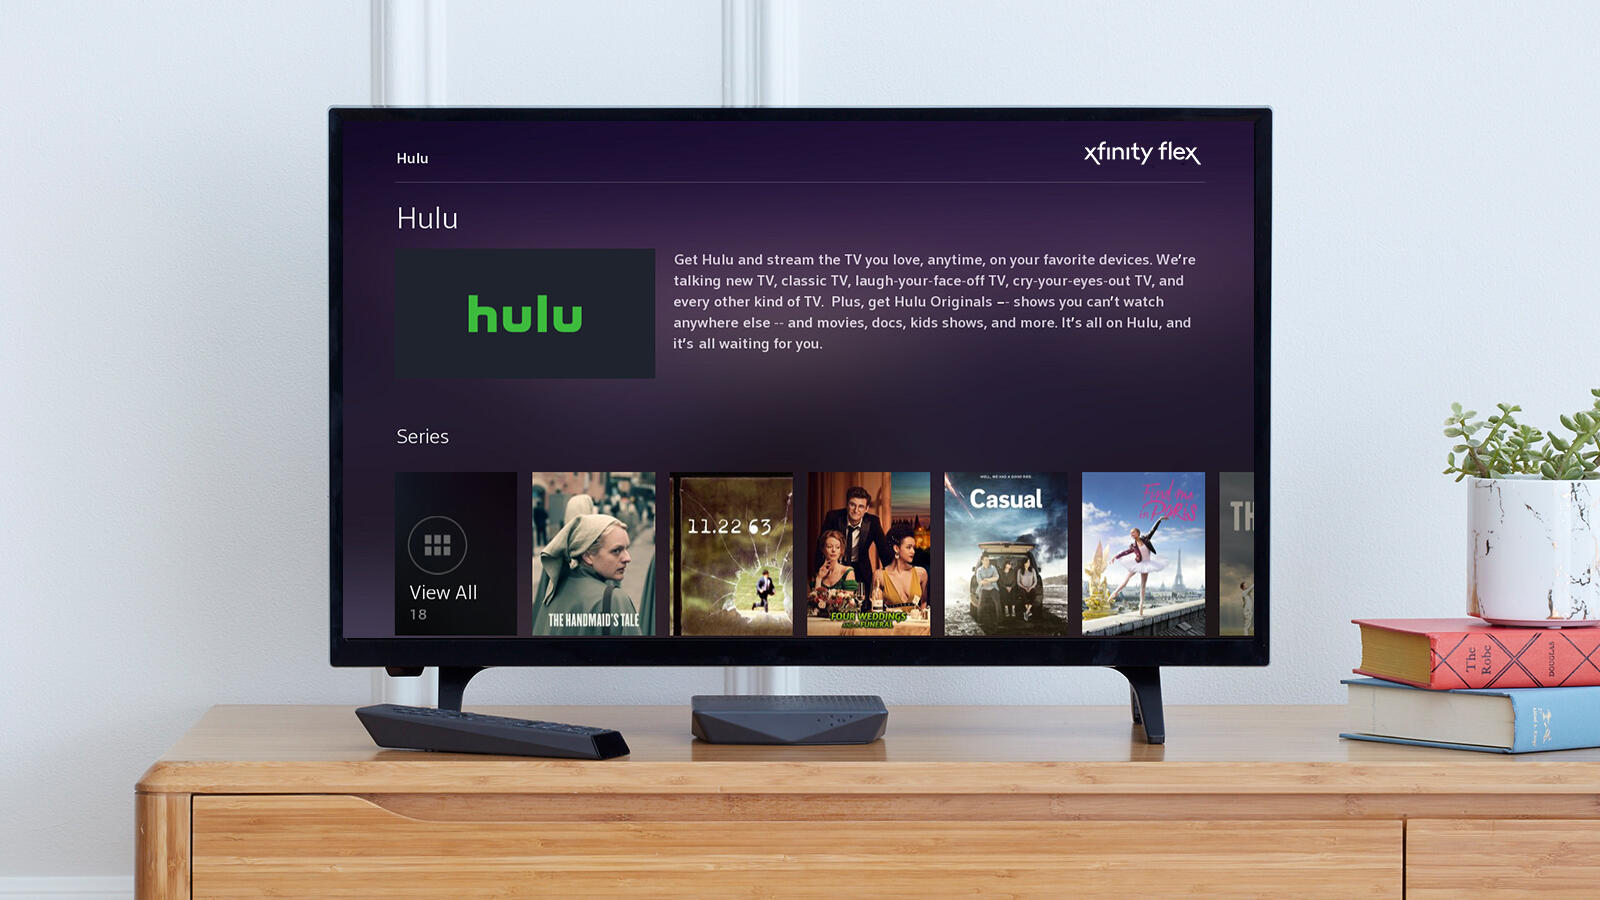 T me shop streaming accounts. Hulu. Xfinity. Disney может выкупить платформу Hulu у Comcast.